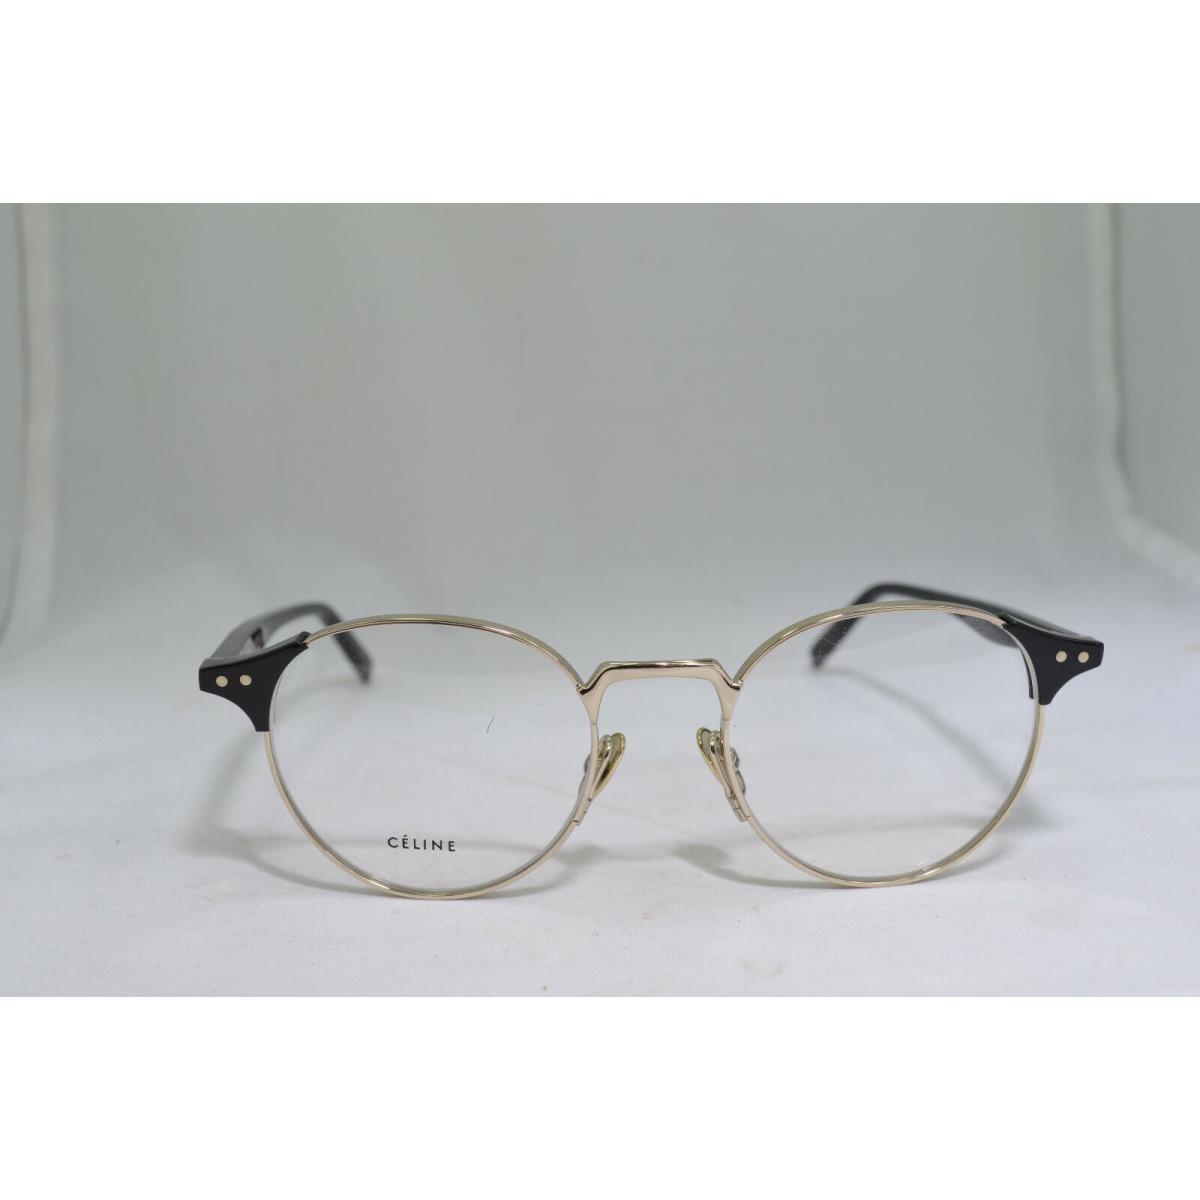 Celine eyeglasses RHL - Silver Frame 0